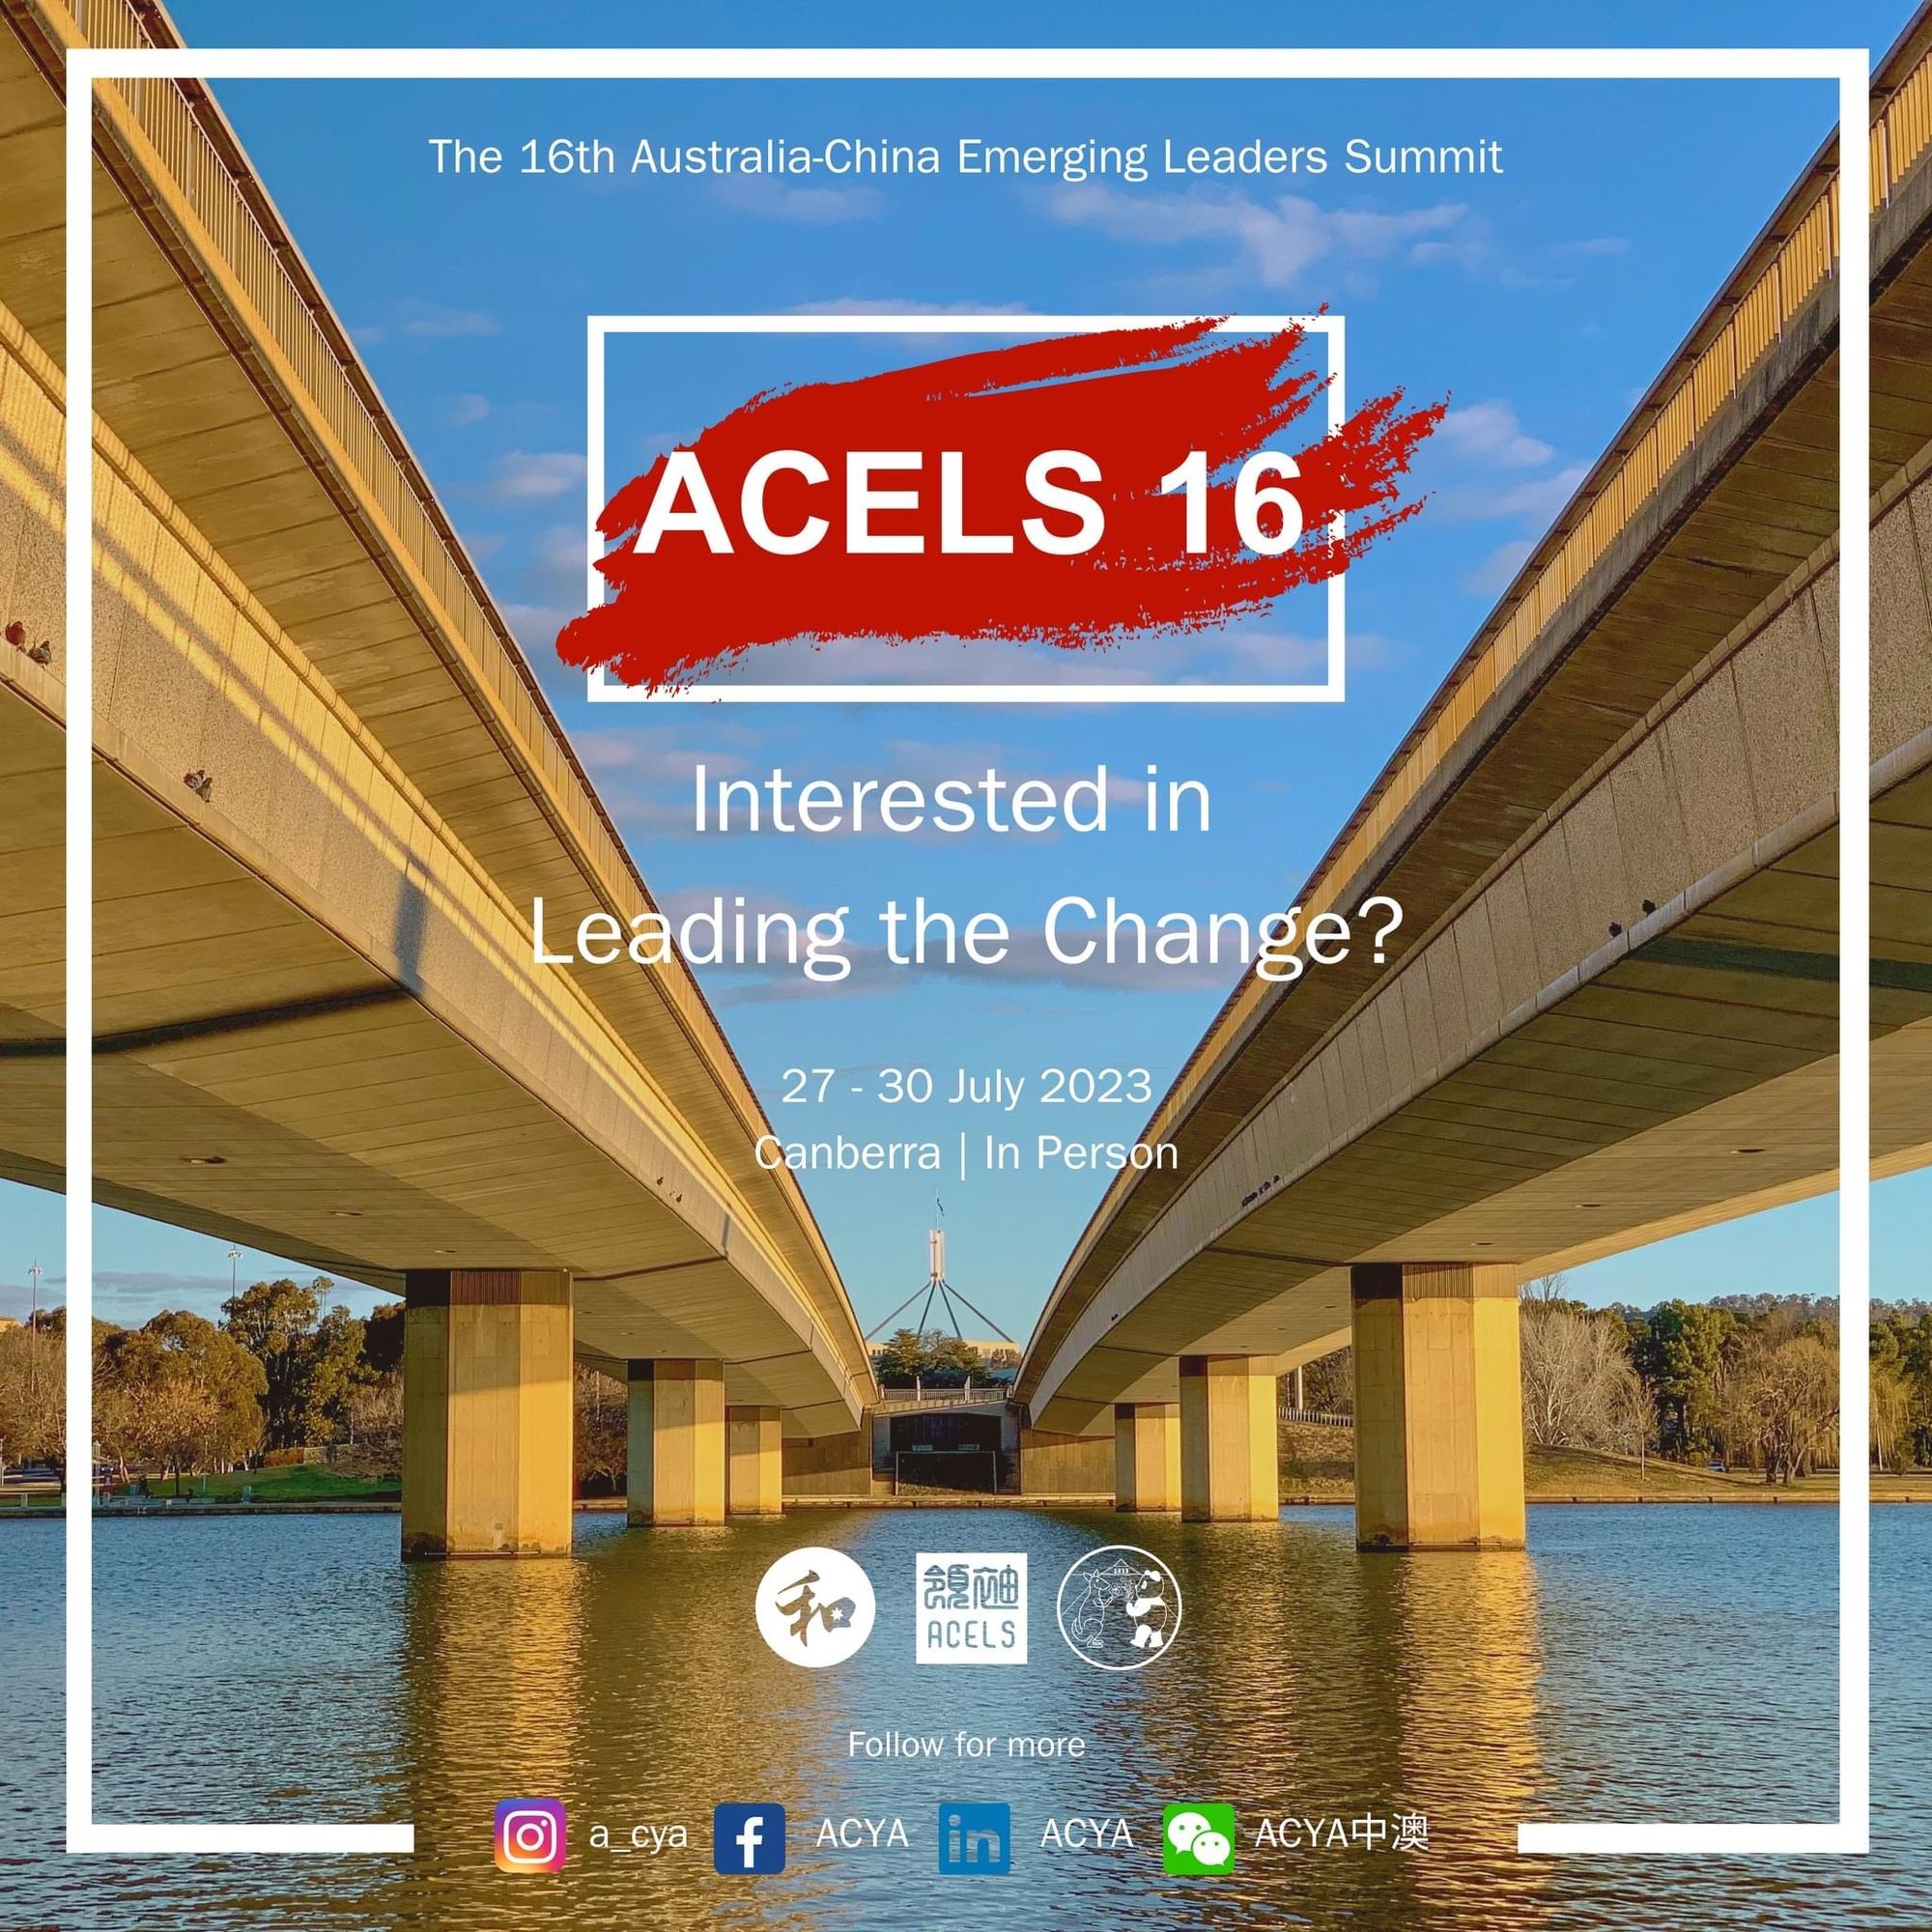 ACELS 16 Delegates Application now open